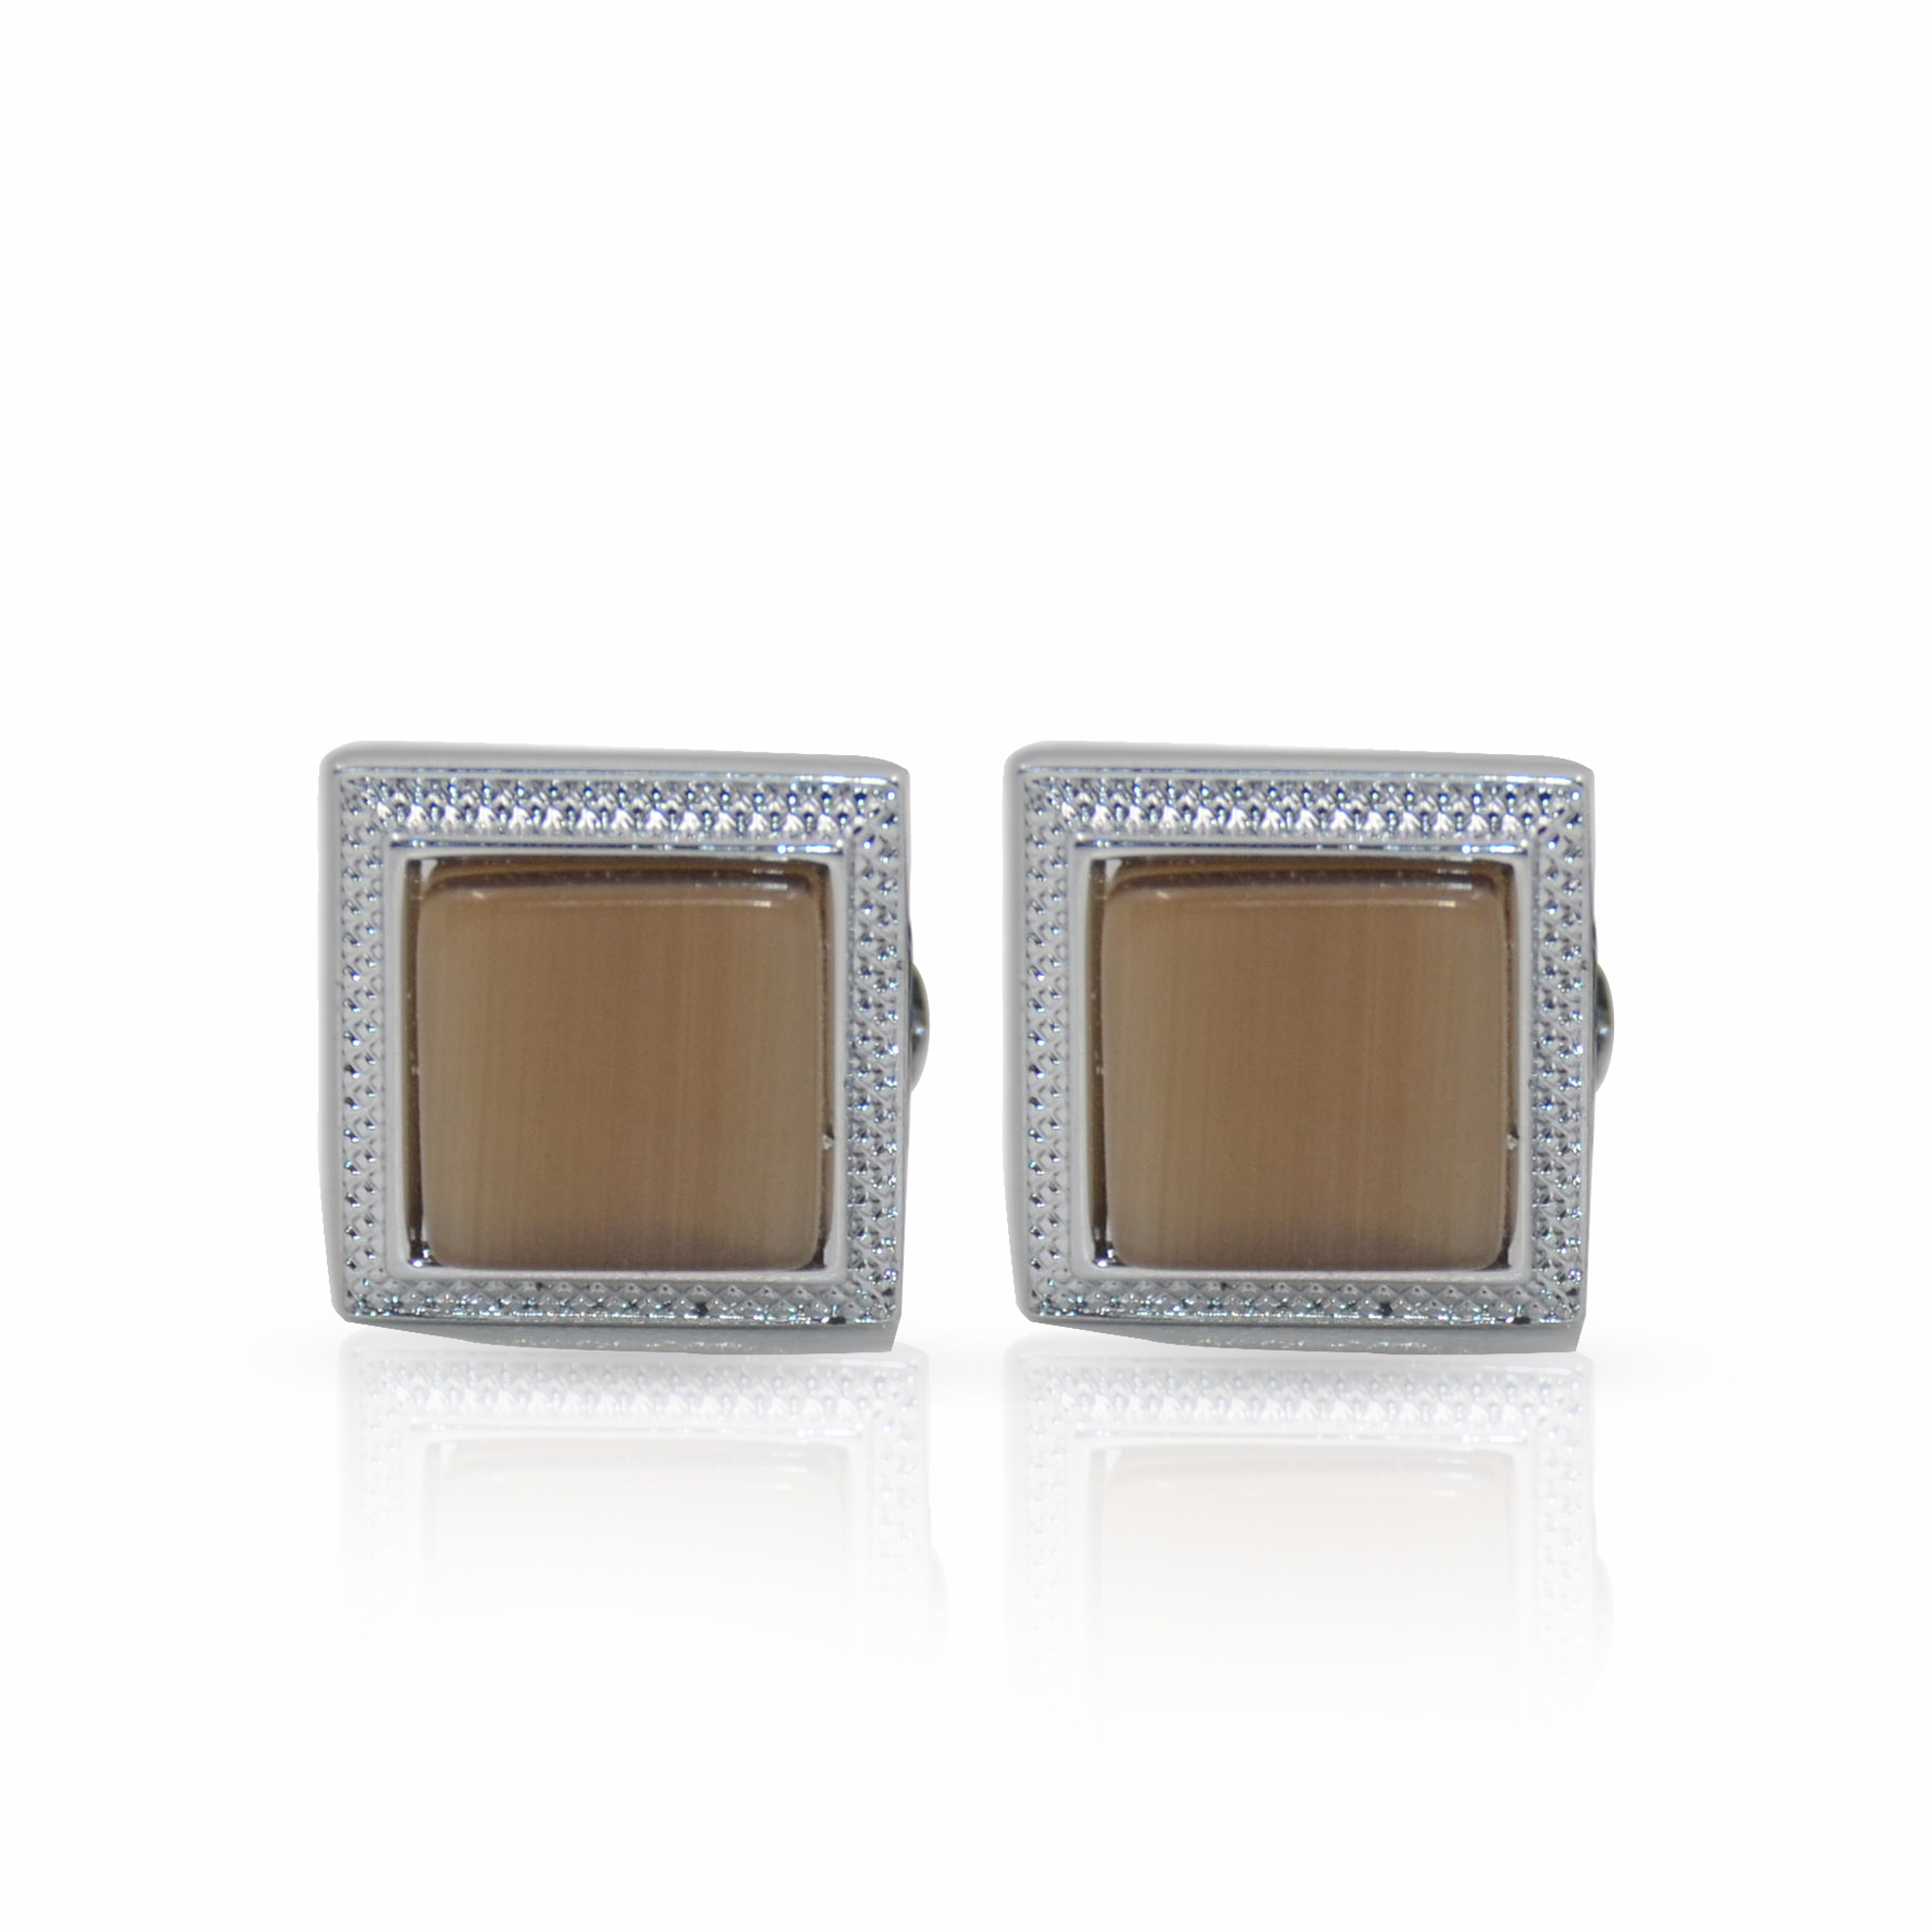 Cufflers Novelty Square Cufflinks CU-2030-C | Mid Brown Crystal | Free Gift Box